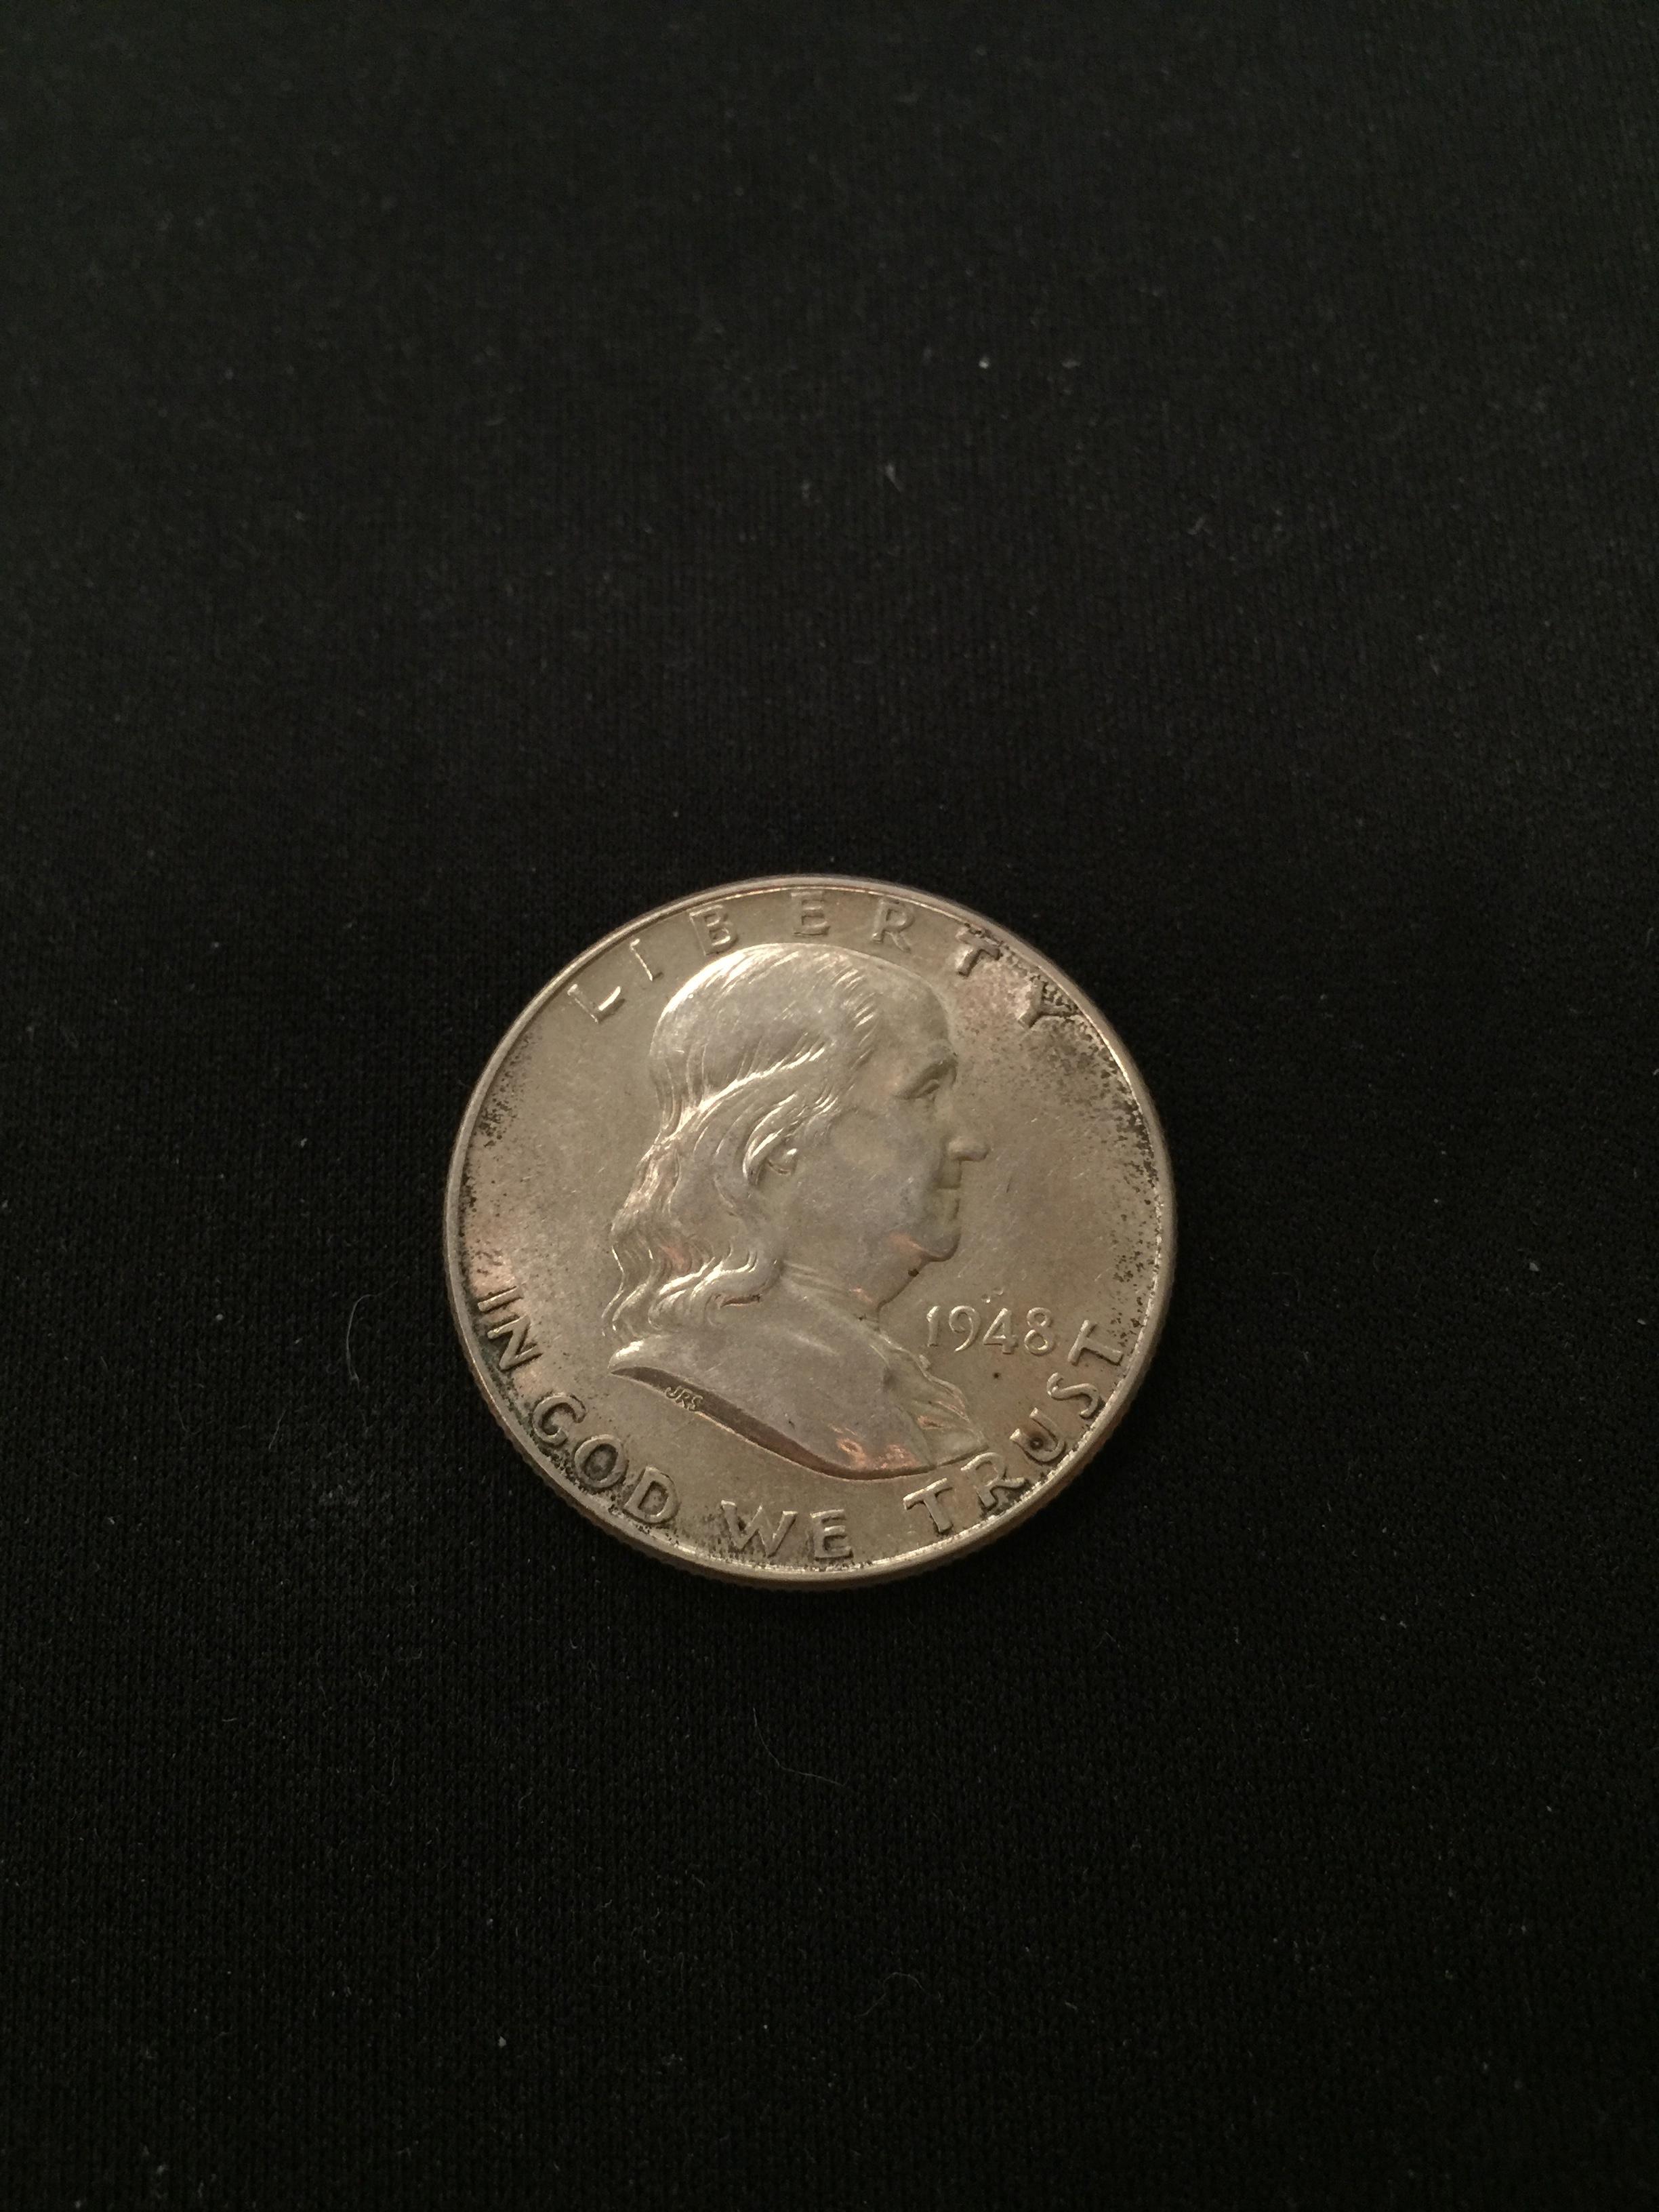 1948-United States Franklin Half Dollar - 90% Silver Coin